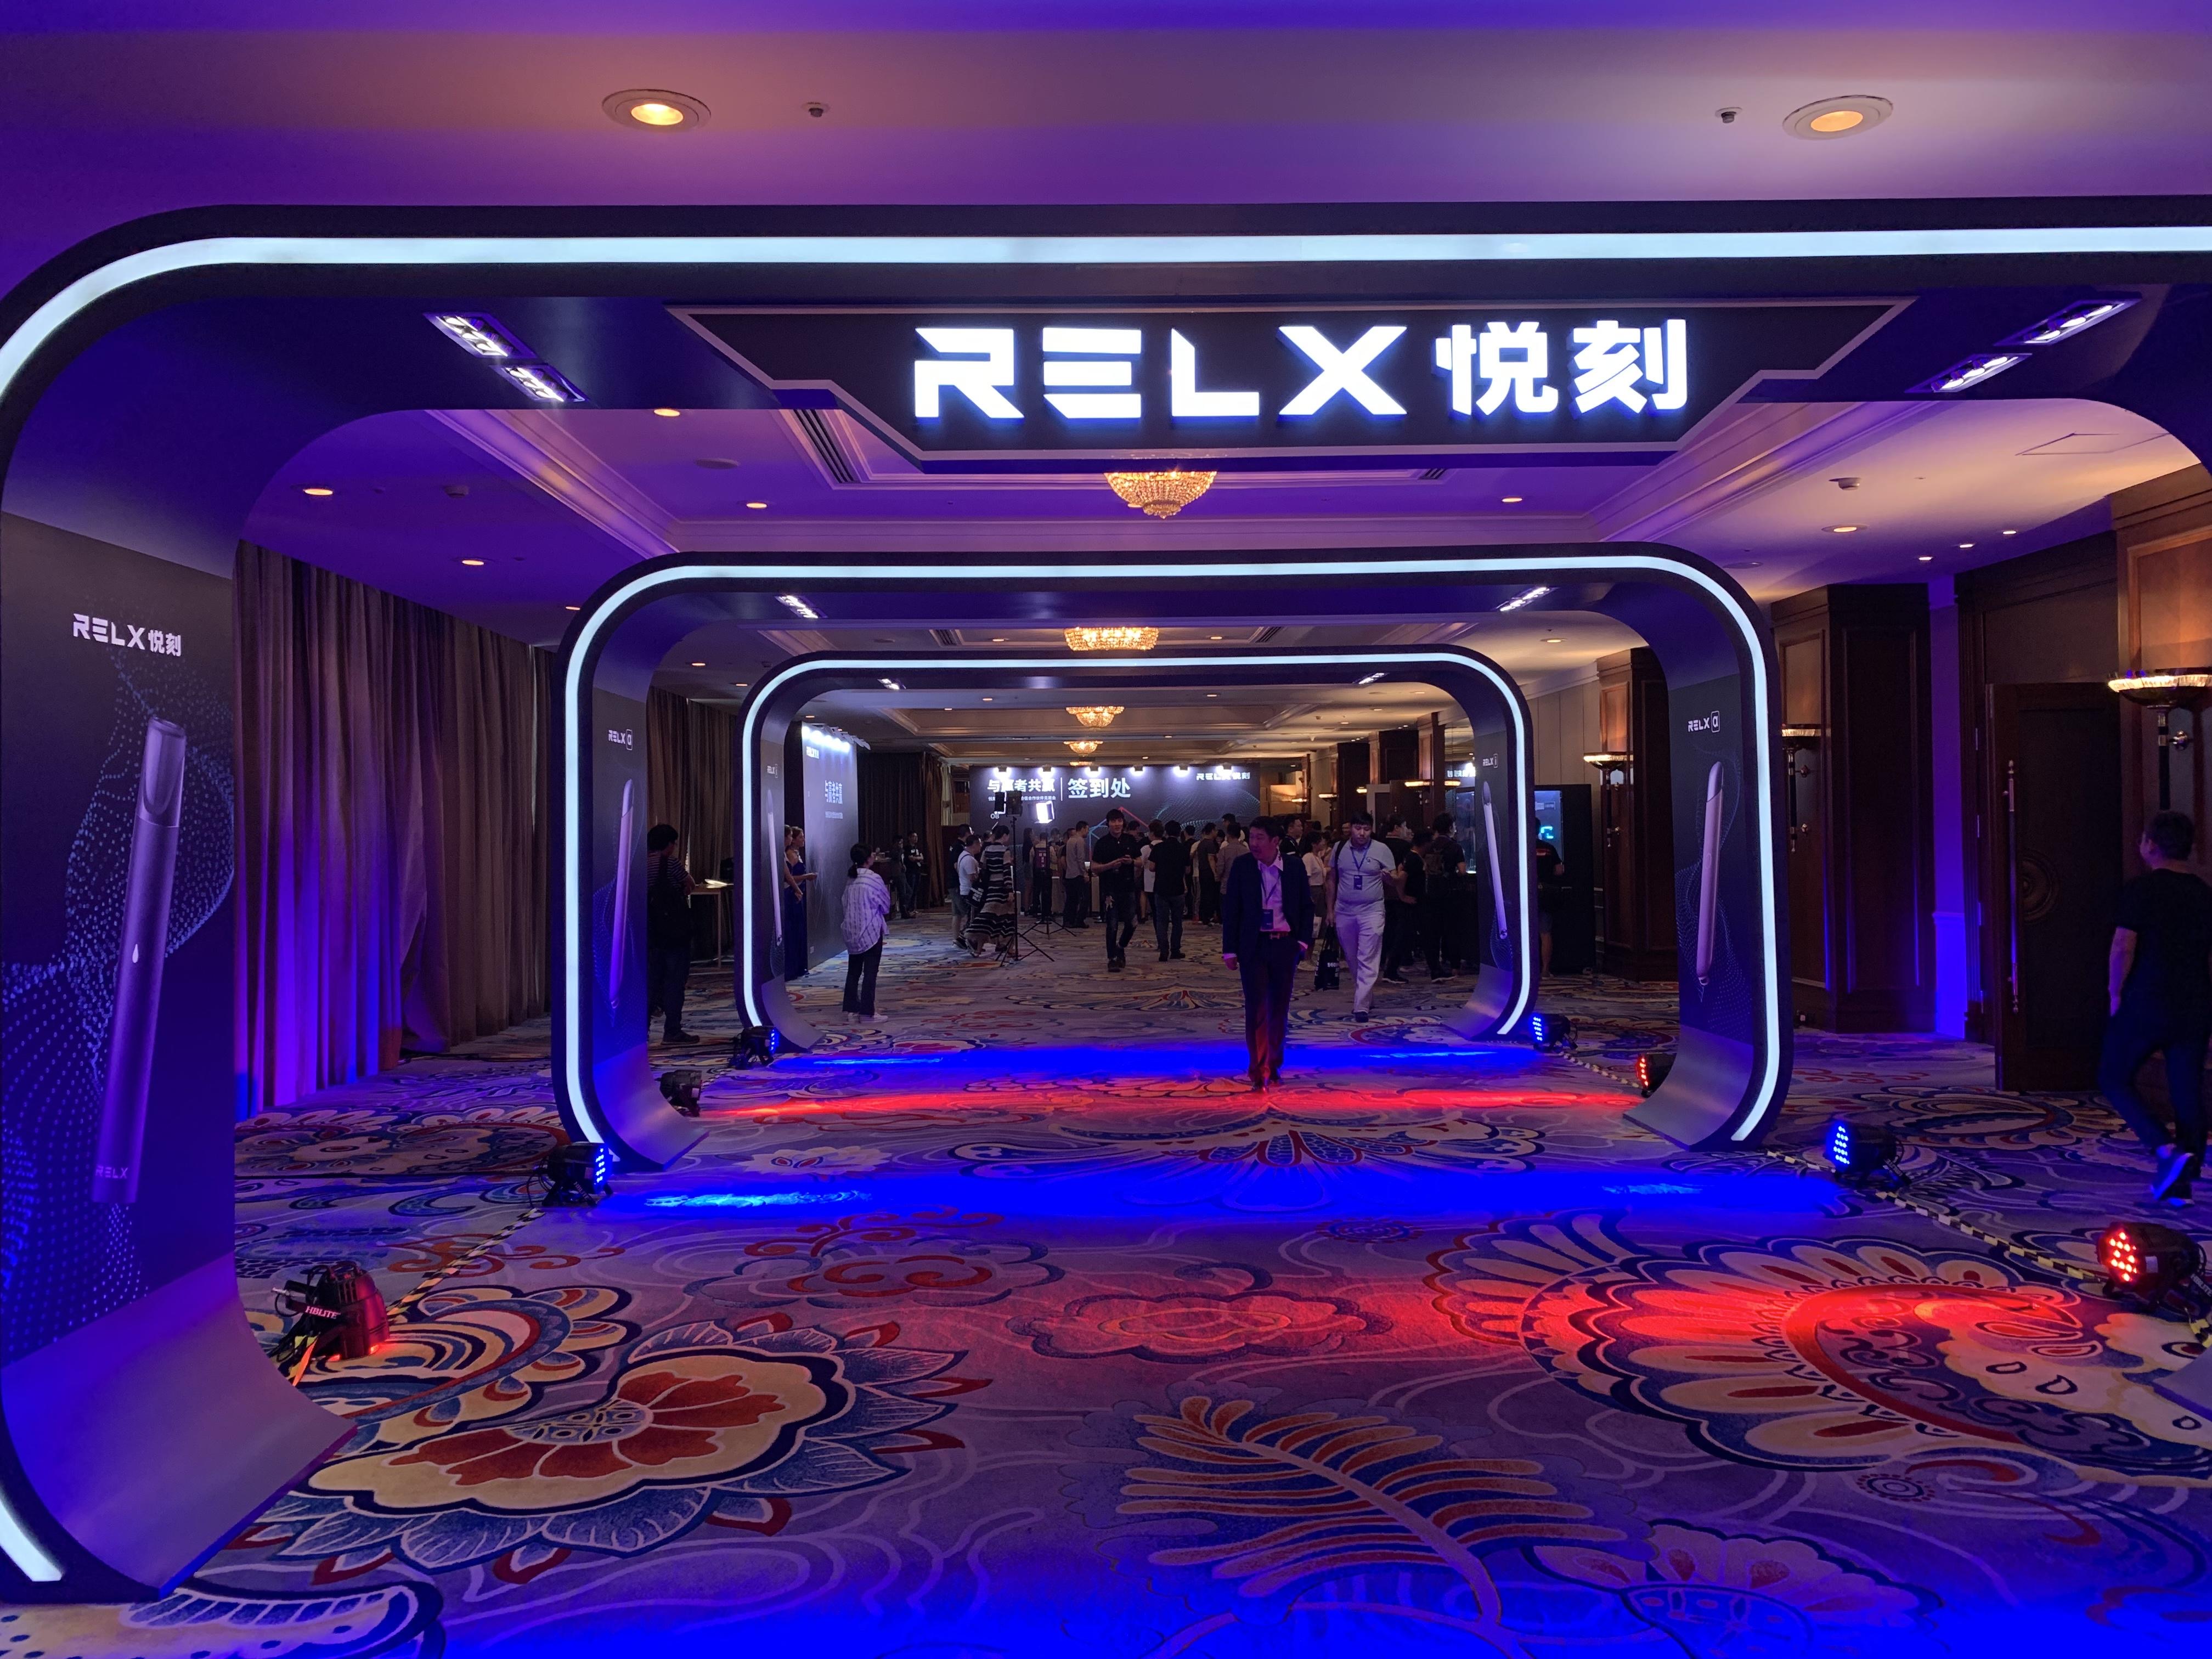 RELX 悦刻连发三款新品 市场份额远超2到10名总和